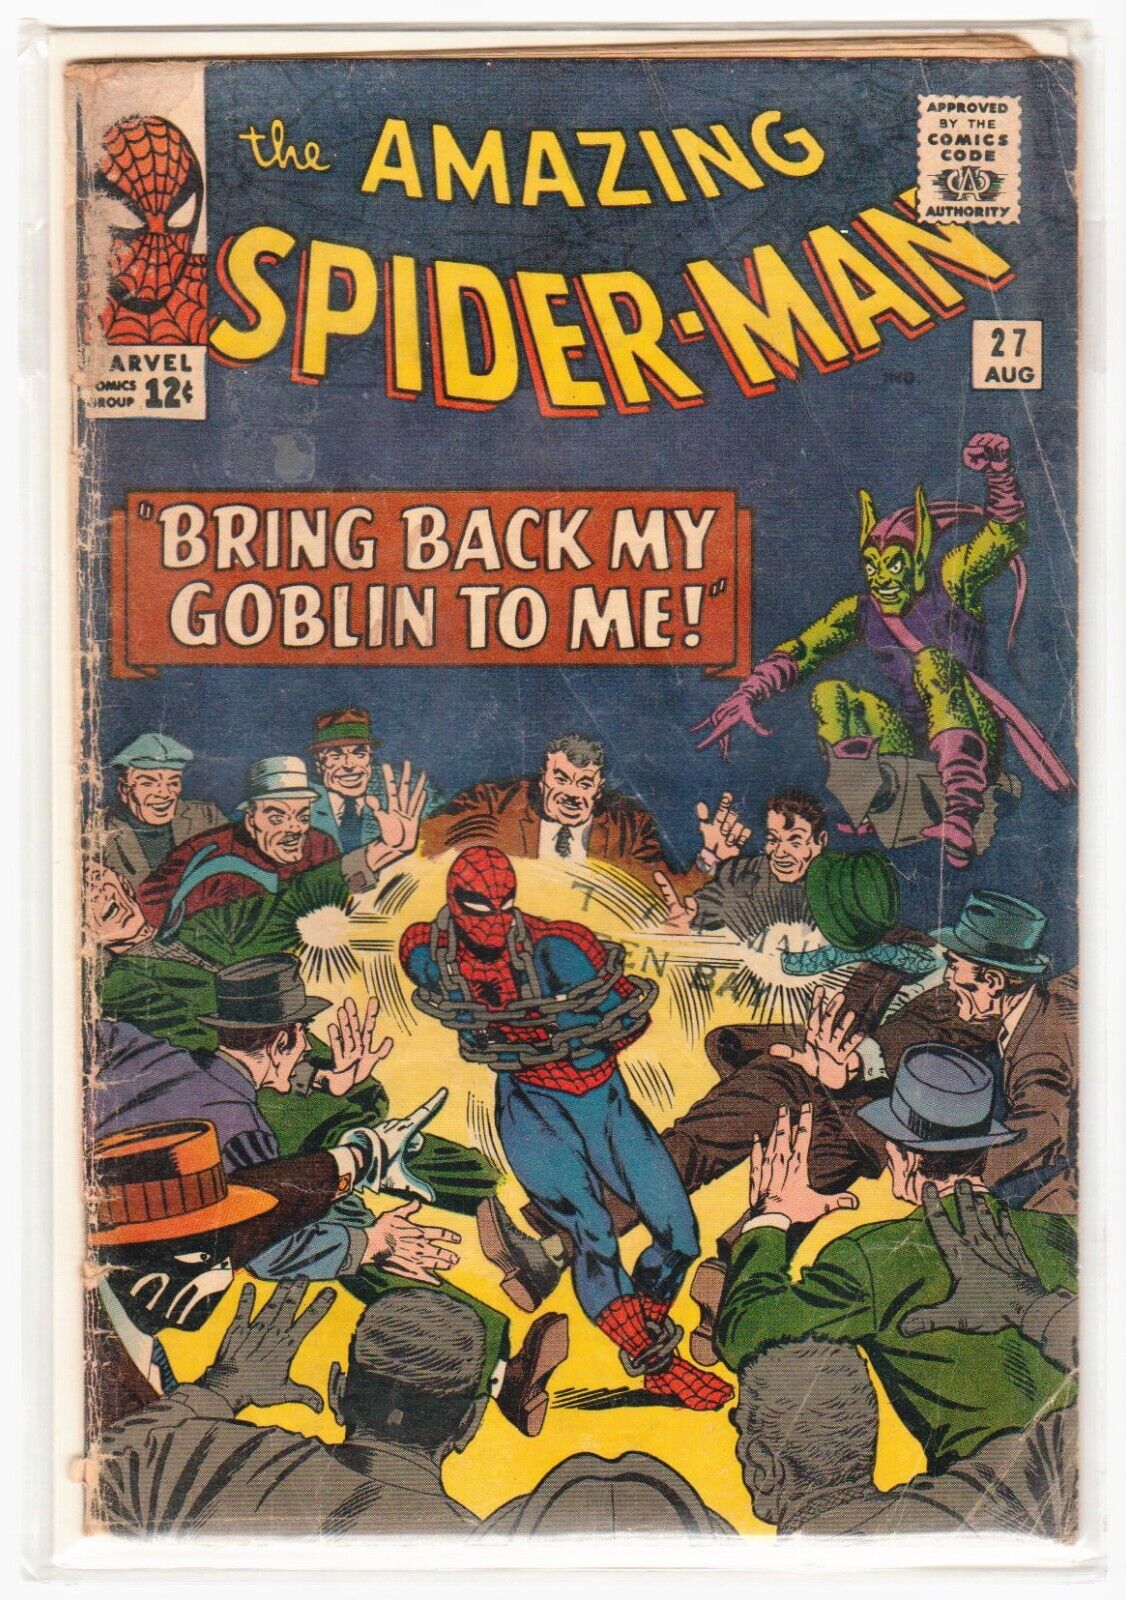 THE AMAZING SPIDER-MAN #27 GREEN GOBLIN SILVER AGE MARVEL COMICS 1965